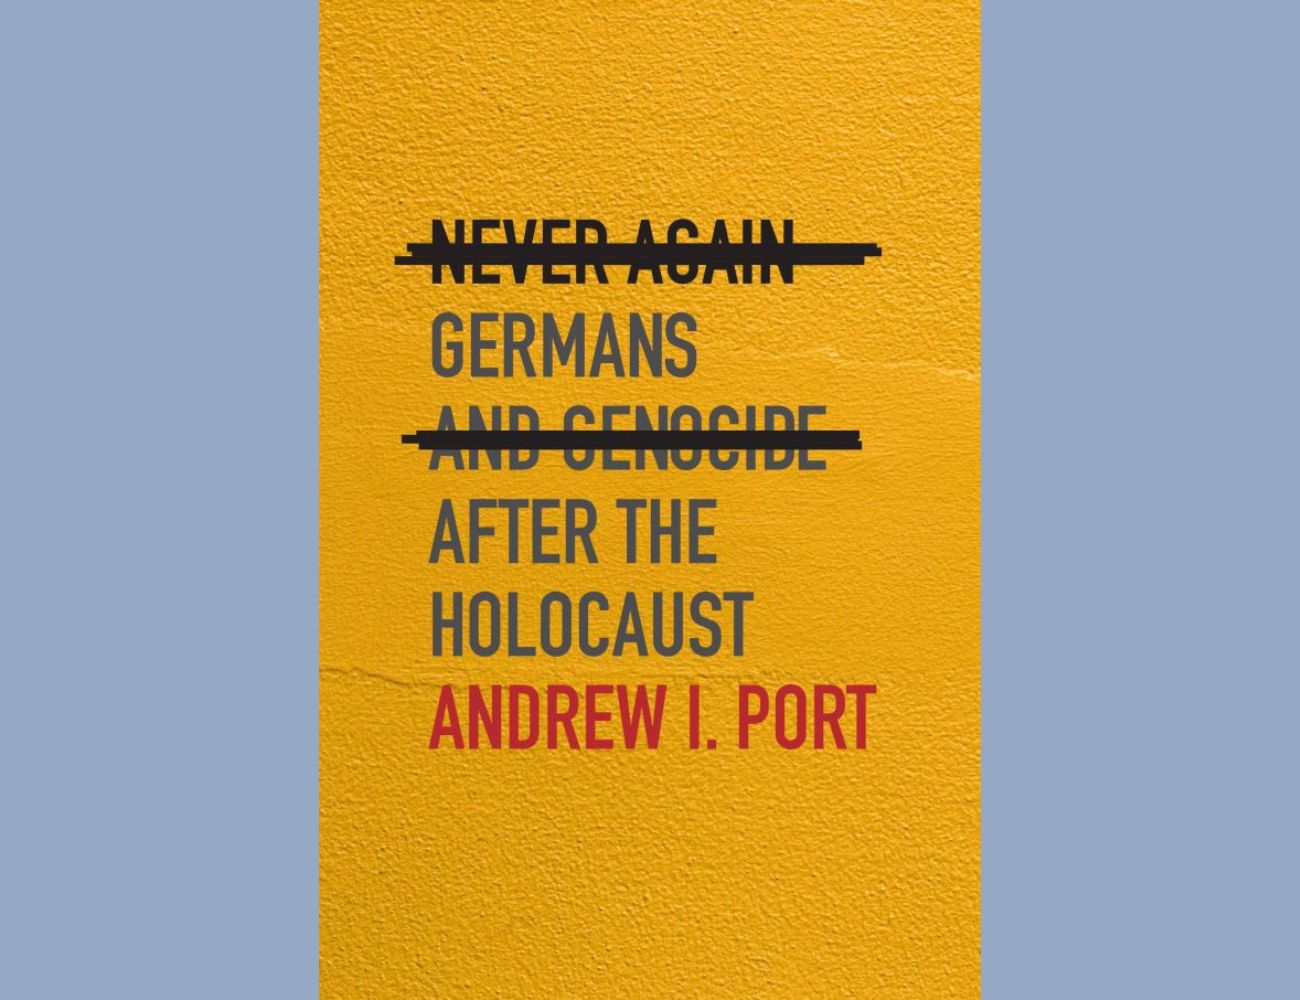 Amsterdam German Studies Lecture | Andrew I. Port